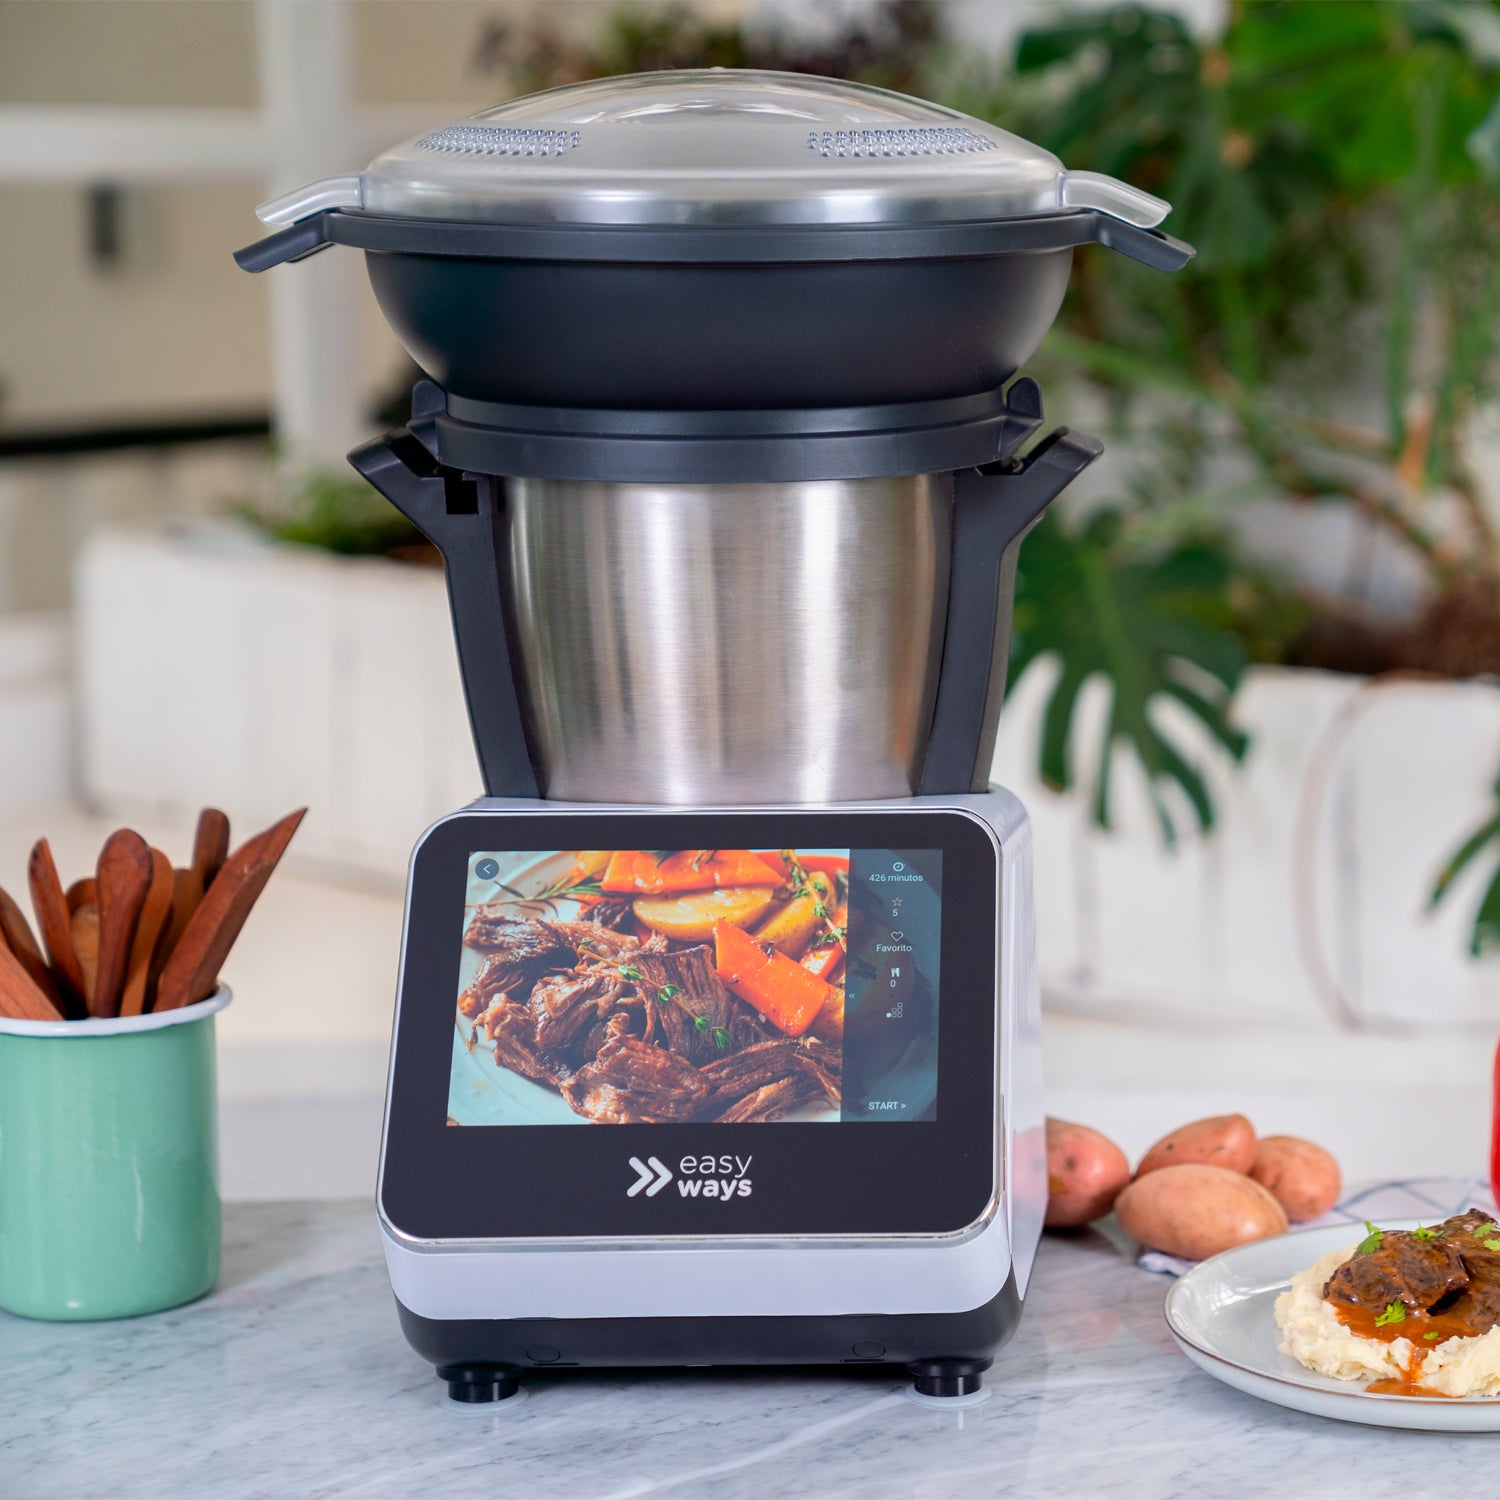 Robot de Cocina Kitchen Connect